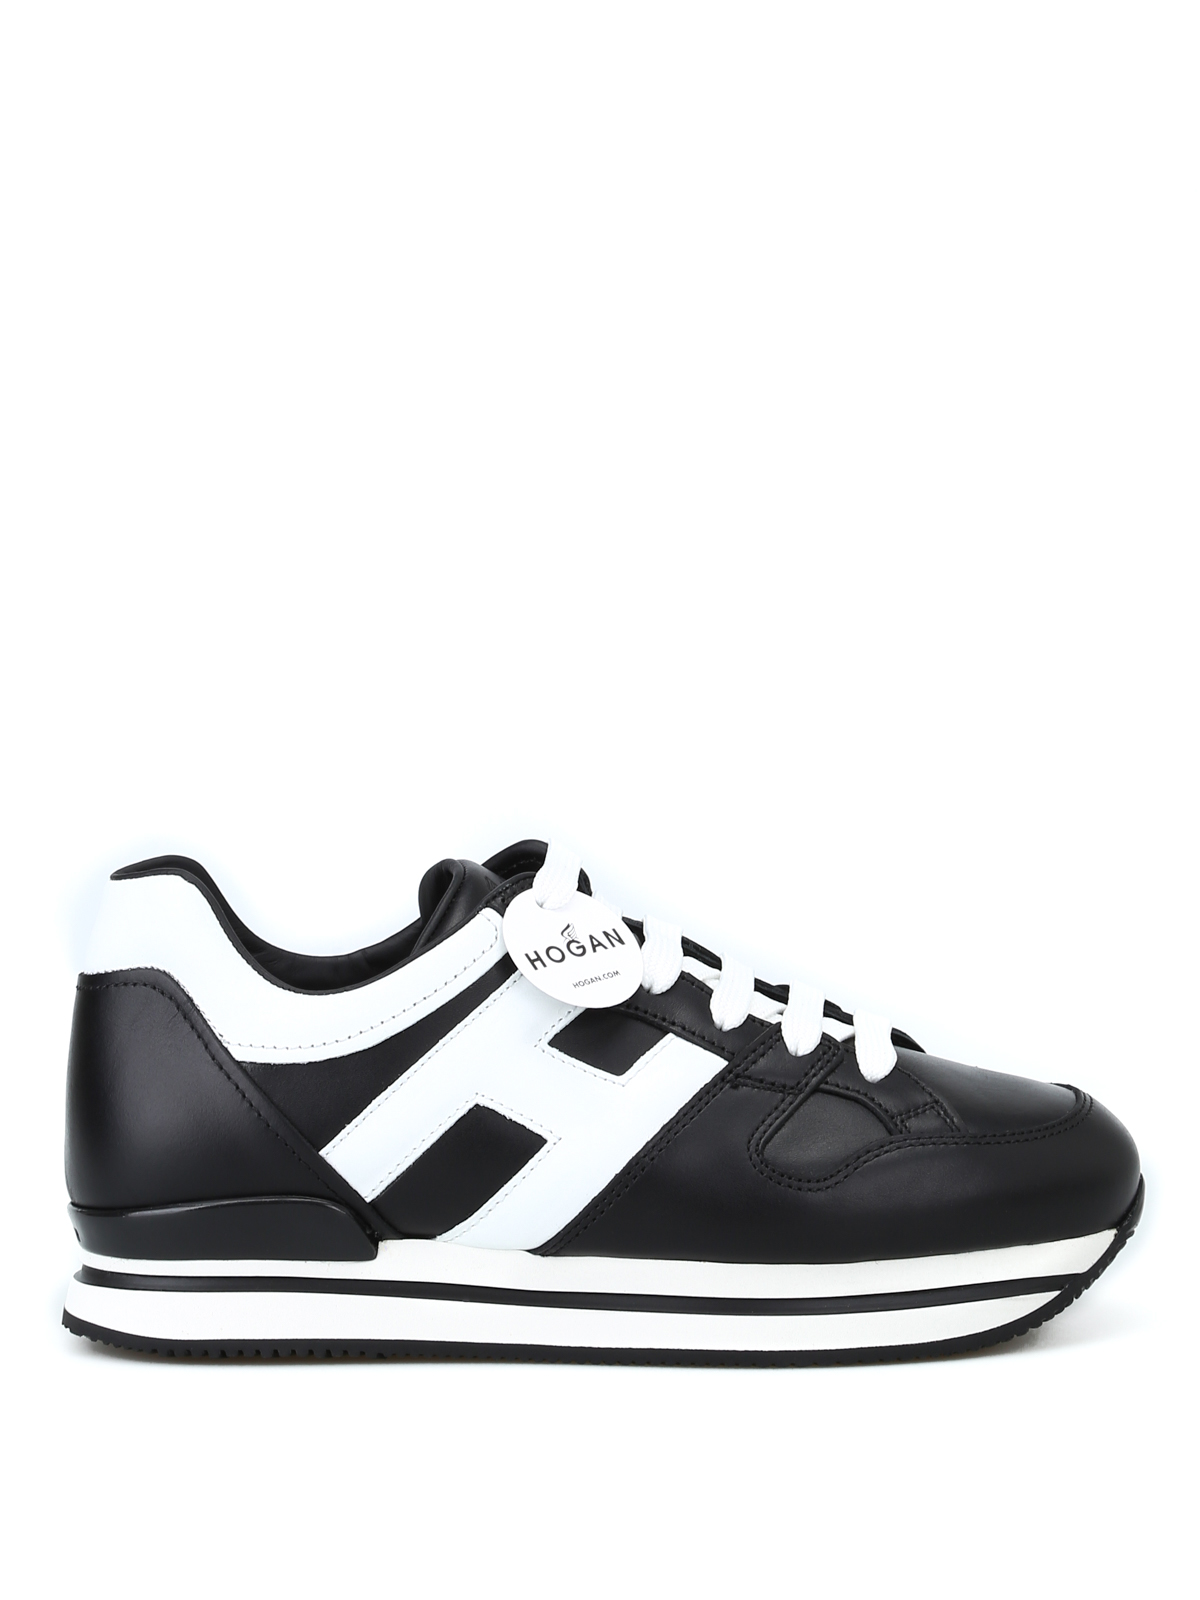 Hogan - Sneaker H222 nere e bianche in pelle - sneakers - HXW2220T548HQK0002